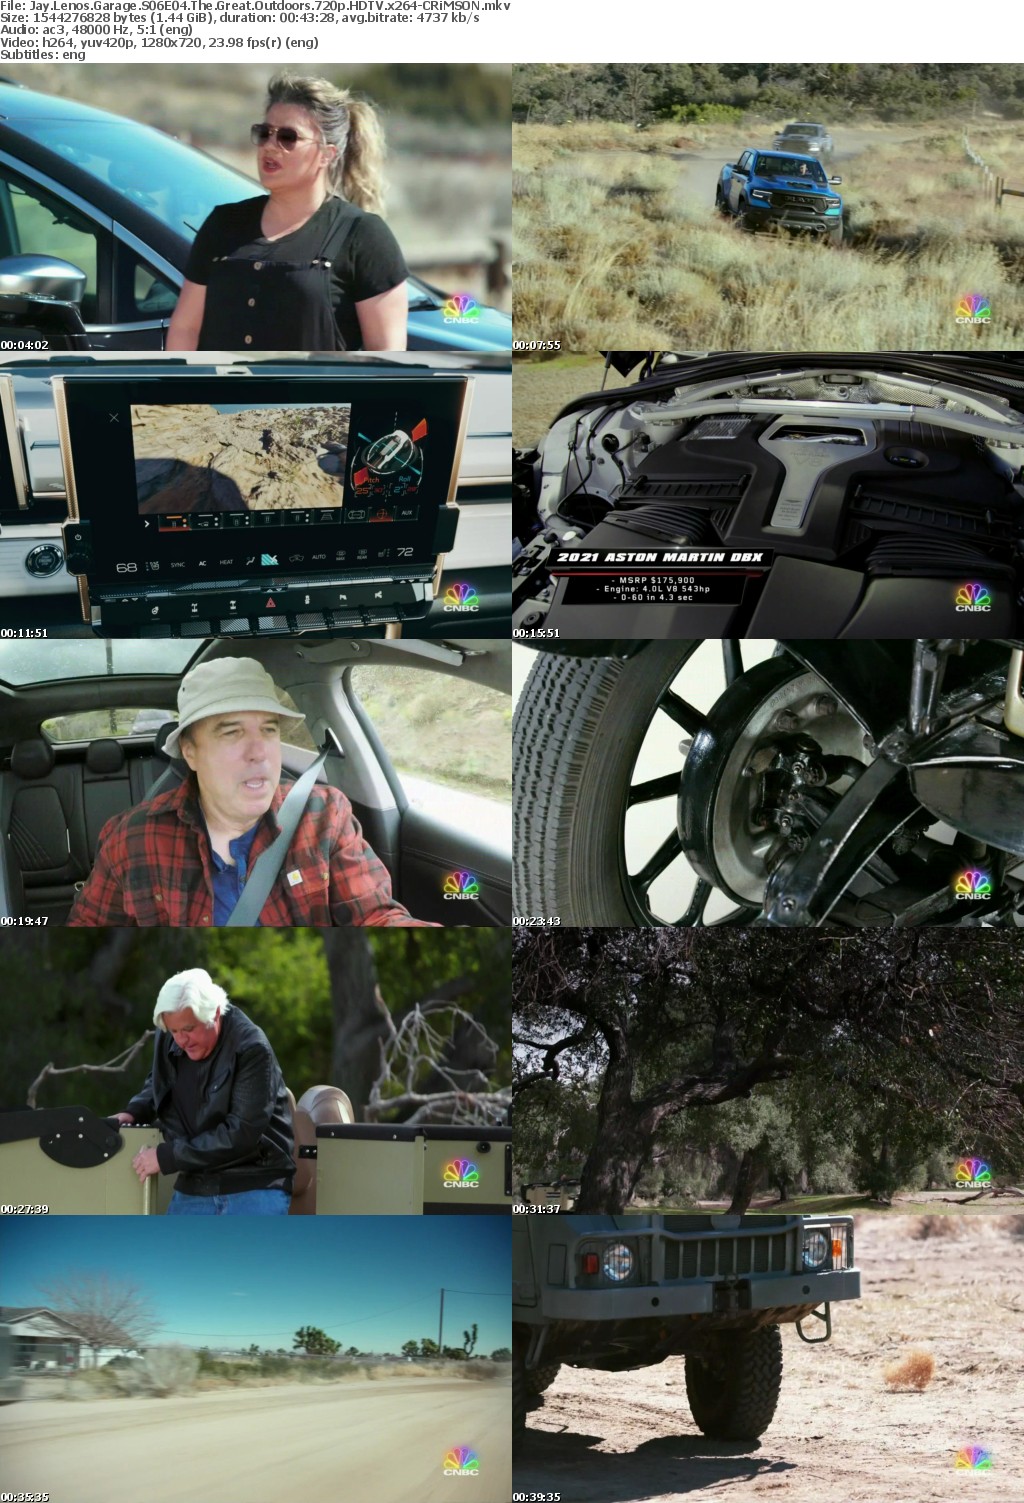 Jay Lenos Garage S06E04 The Great Outdoors 720p HDTV x264-CRiMSON